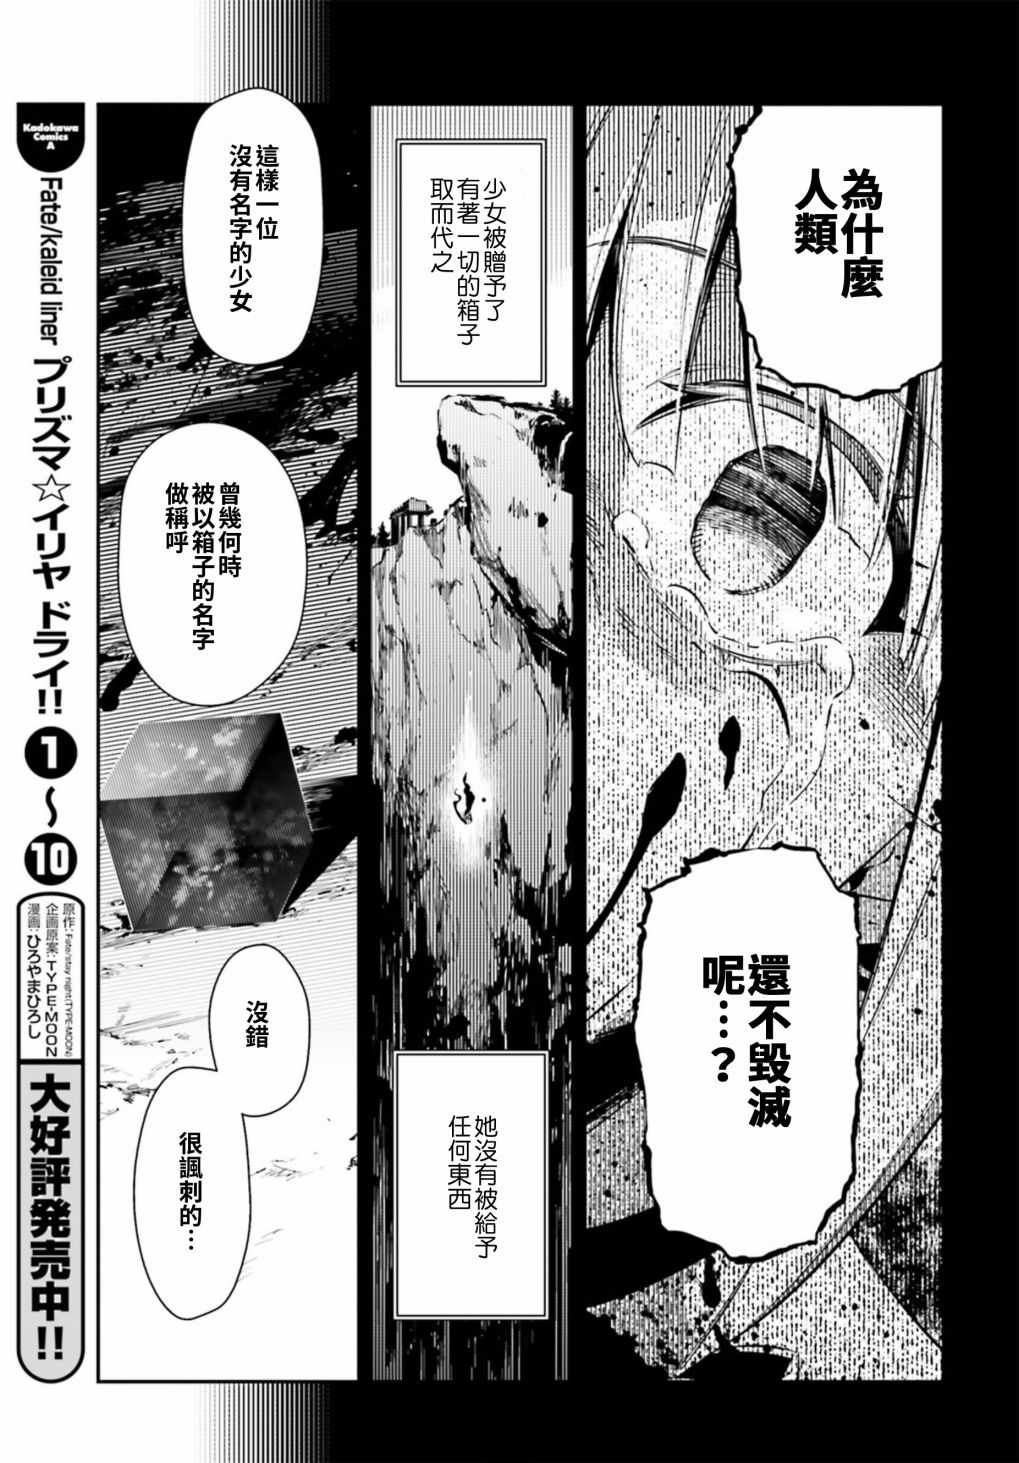 《Fate kaleid liner 魔法少女☆伊莉雅》漫画 Fate kaleid liner 065话